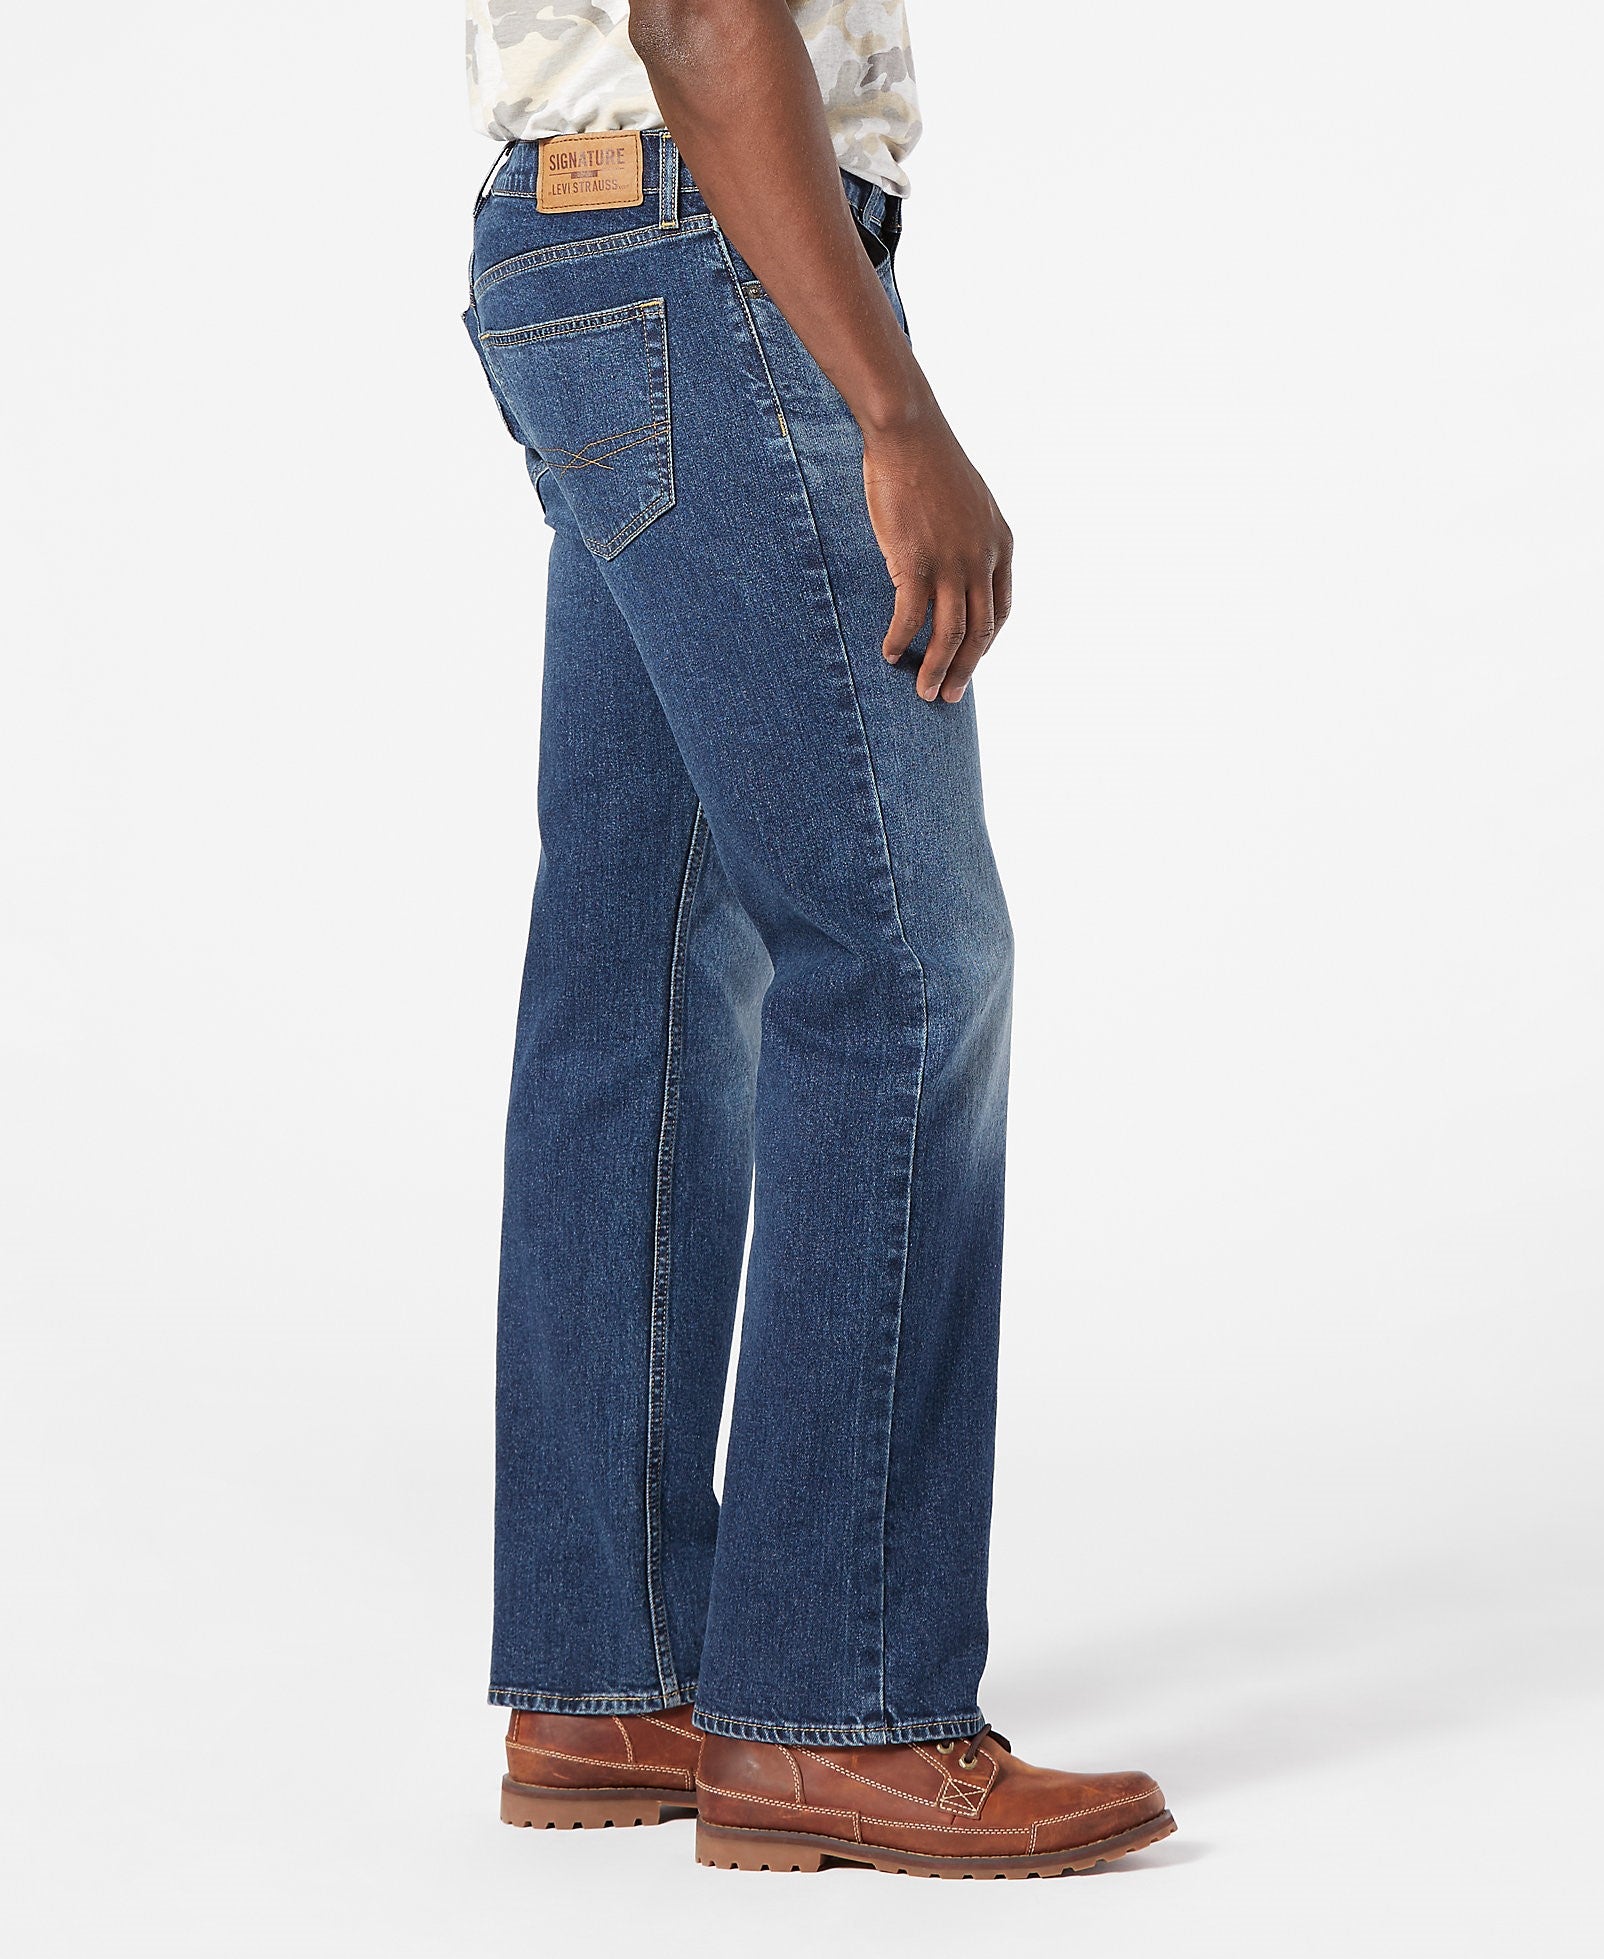 pantalones-jeans-levis-strauss-signature-p-caball-1